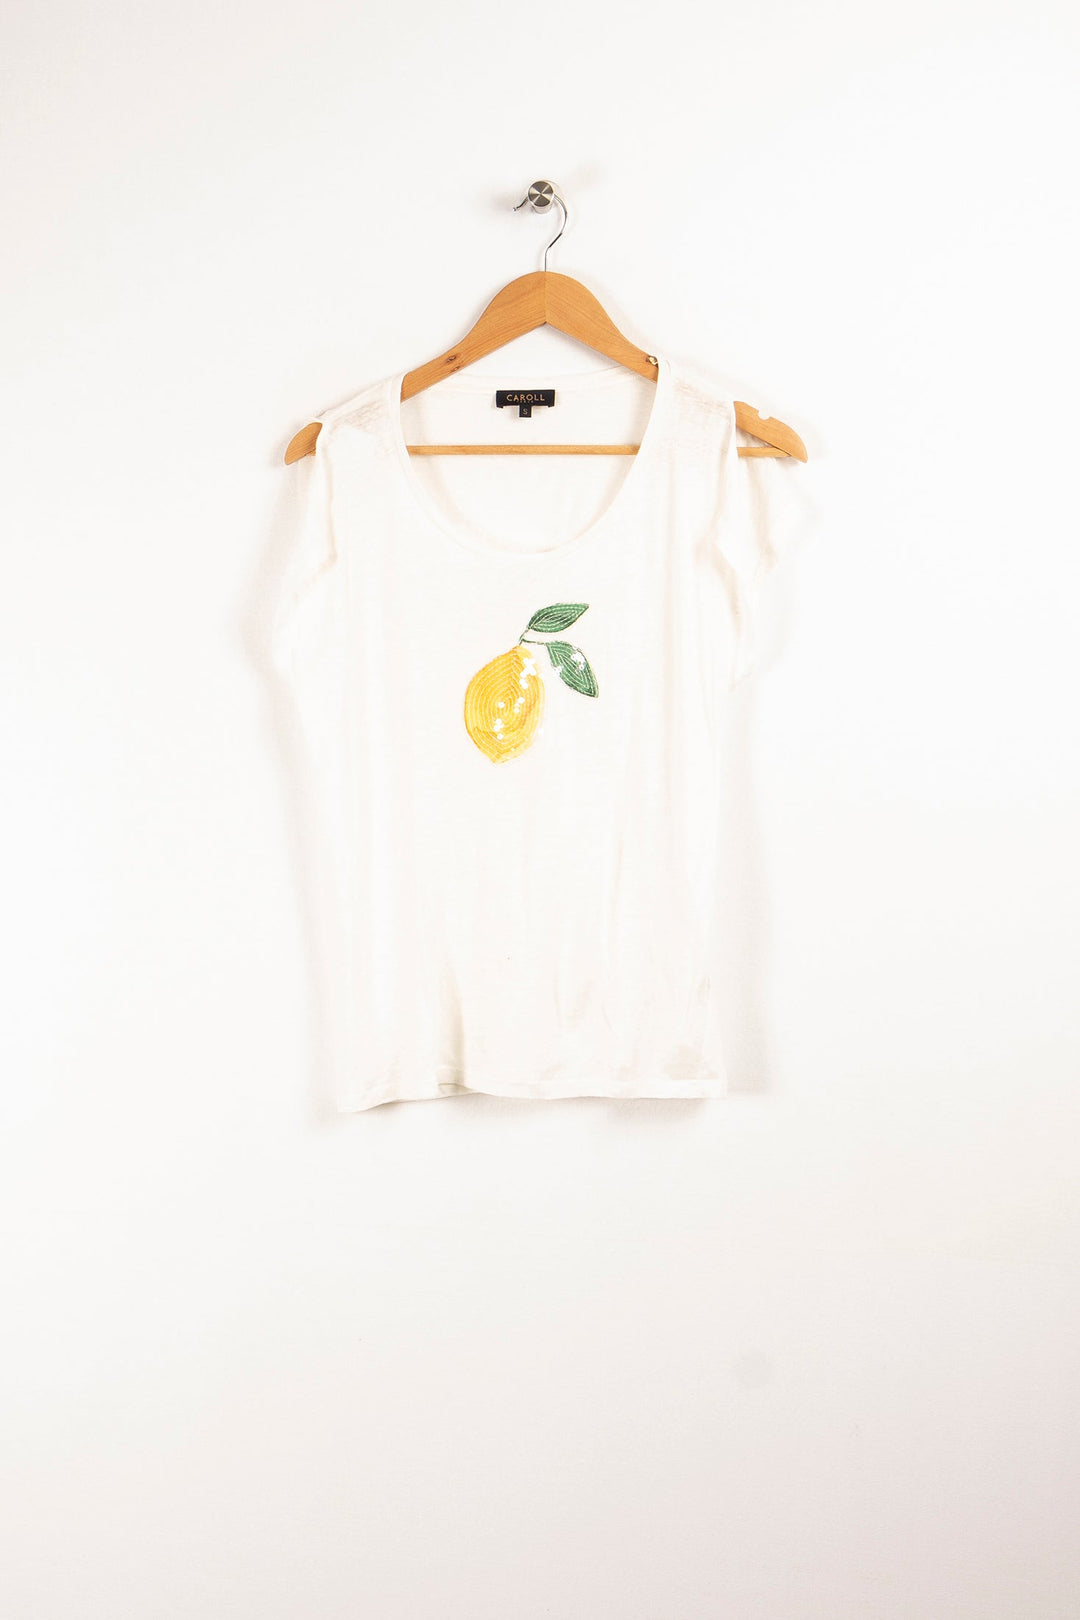 T-shirt blanc à motif orange - S / 36